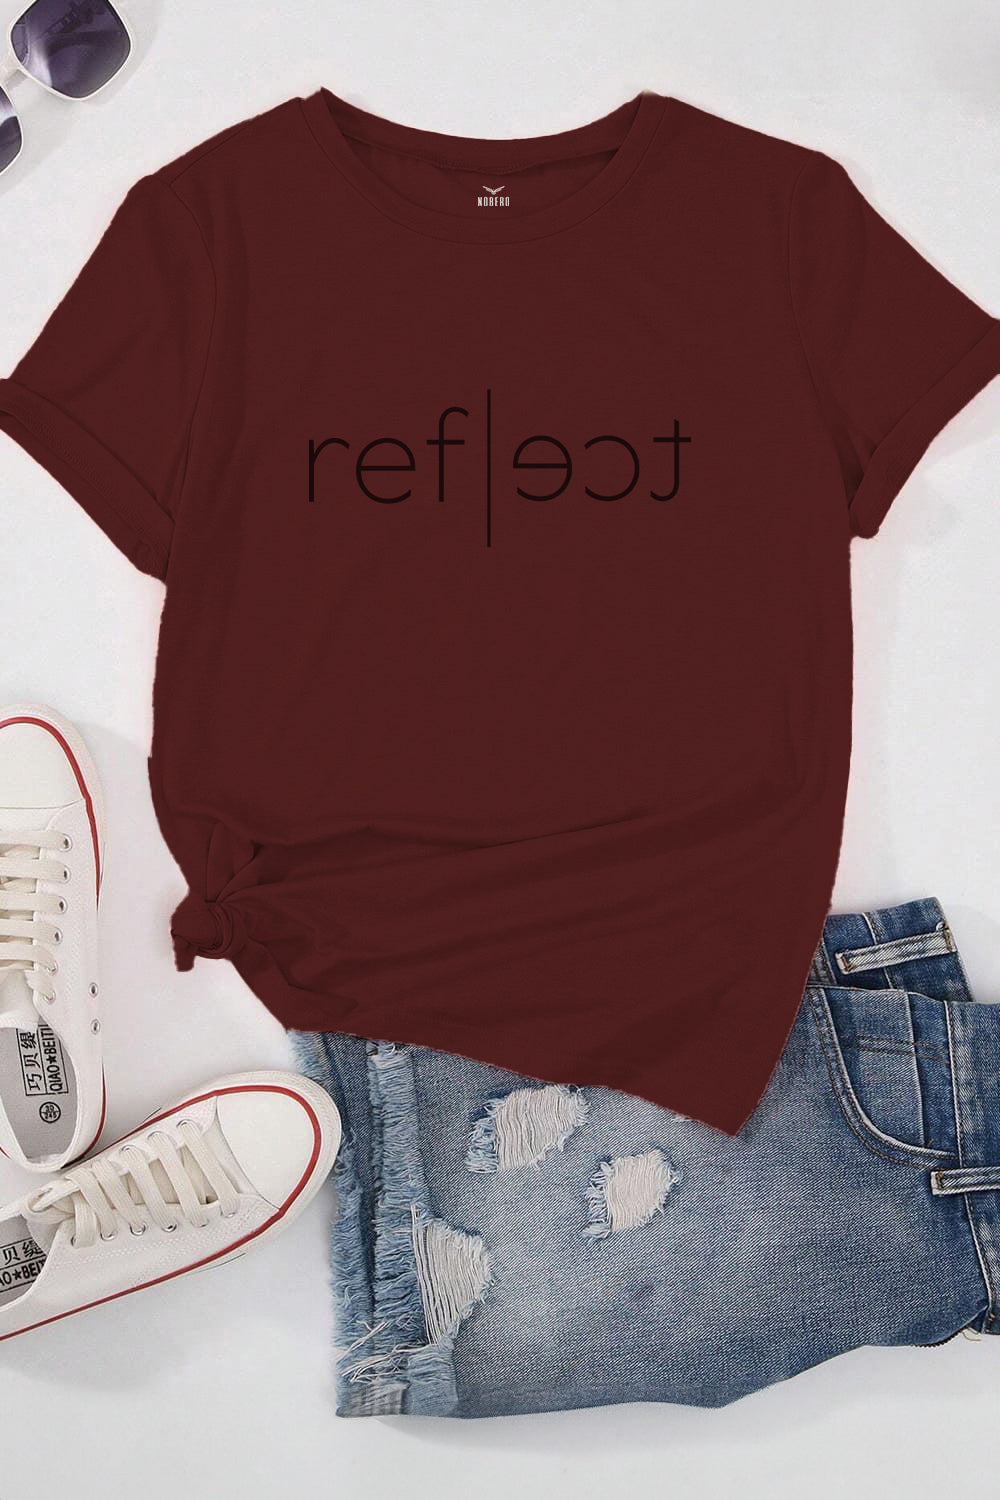 Reflect Classic Fit T-Shirt